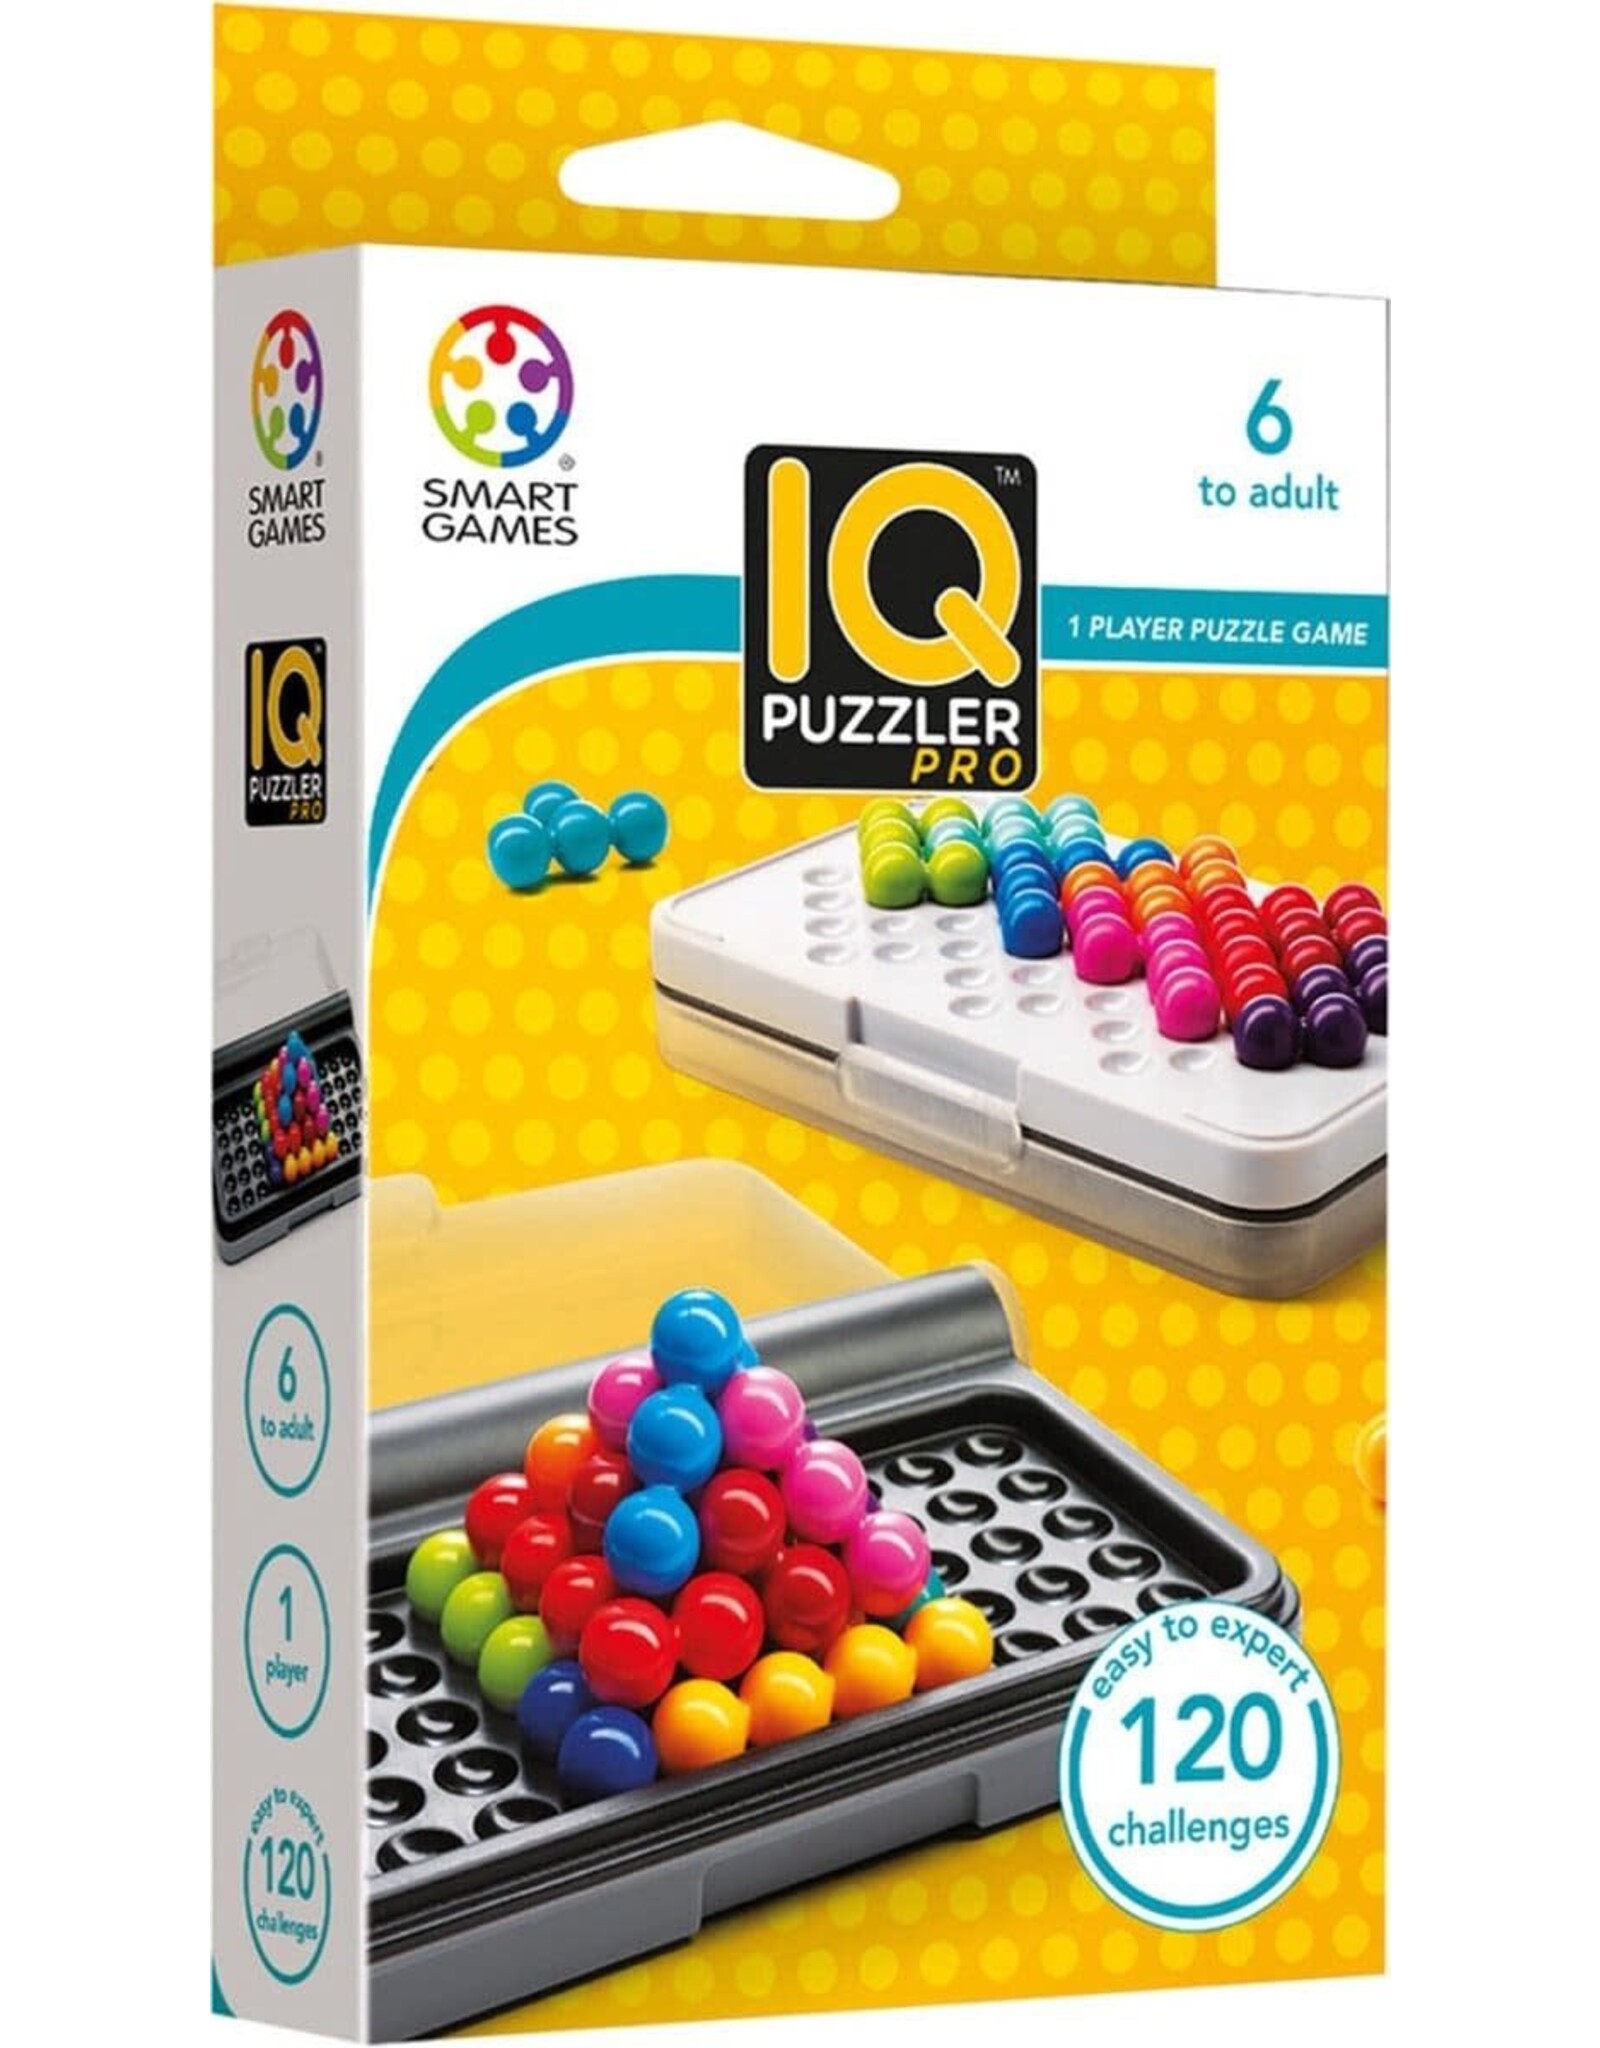 SmartGames Smart Games IQ Pocket Games - IQ Puzzler Pro